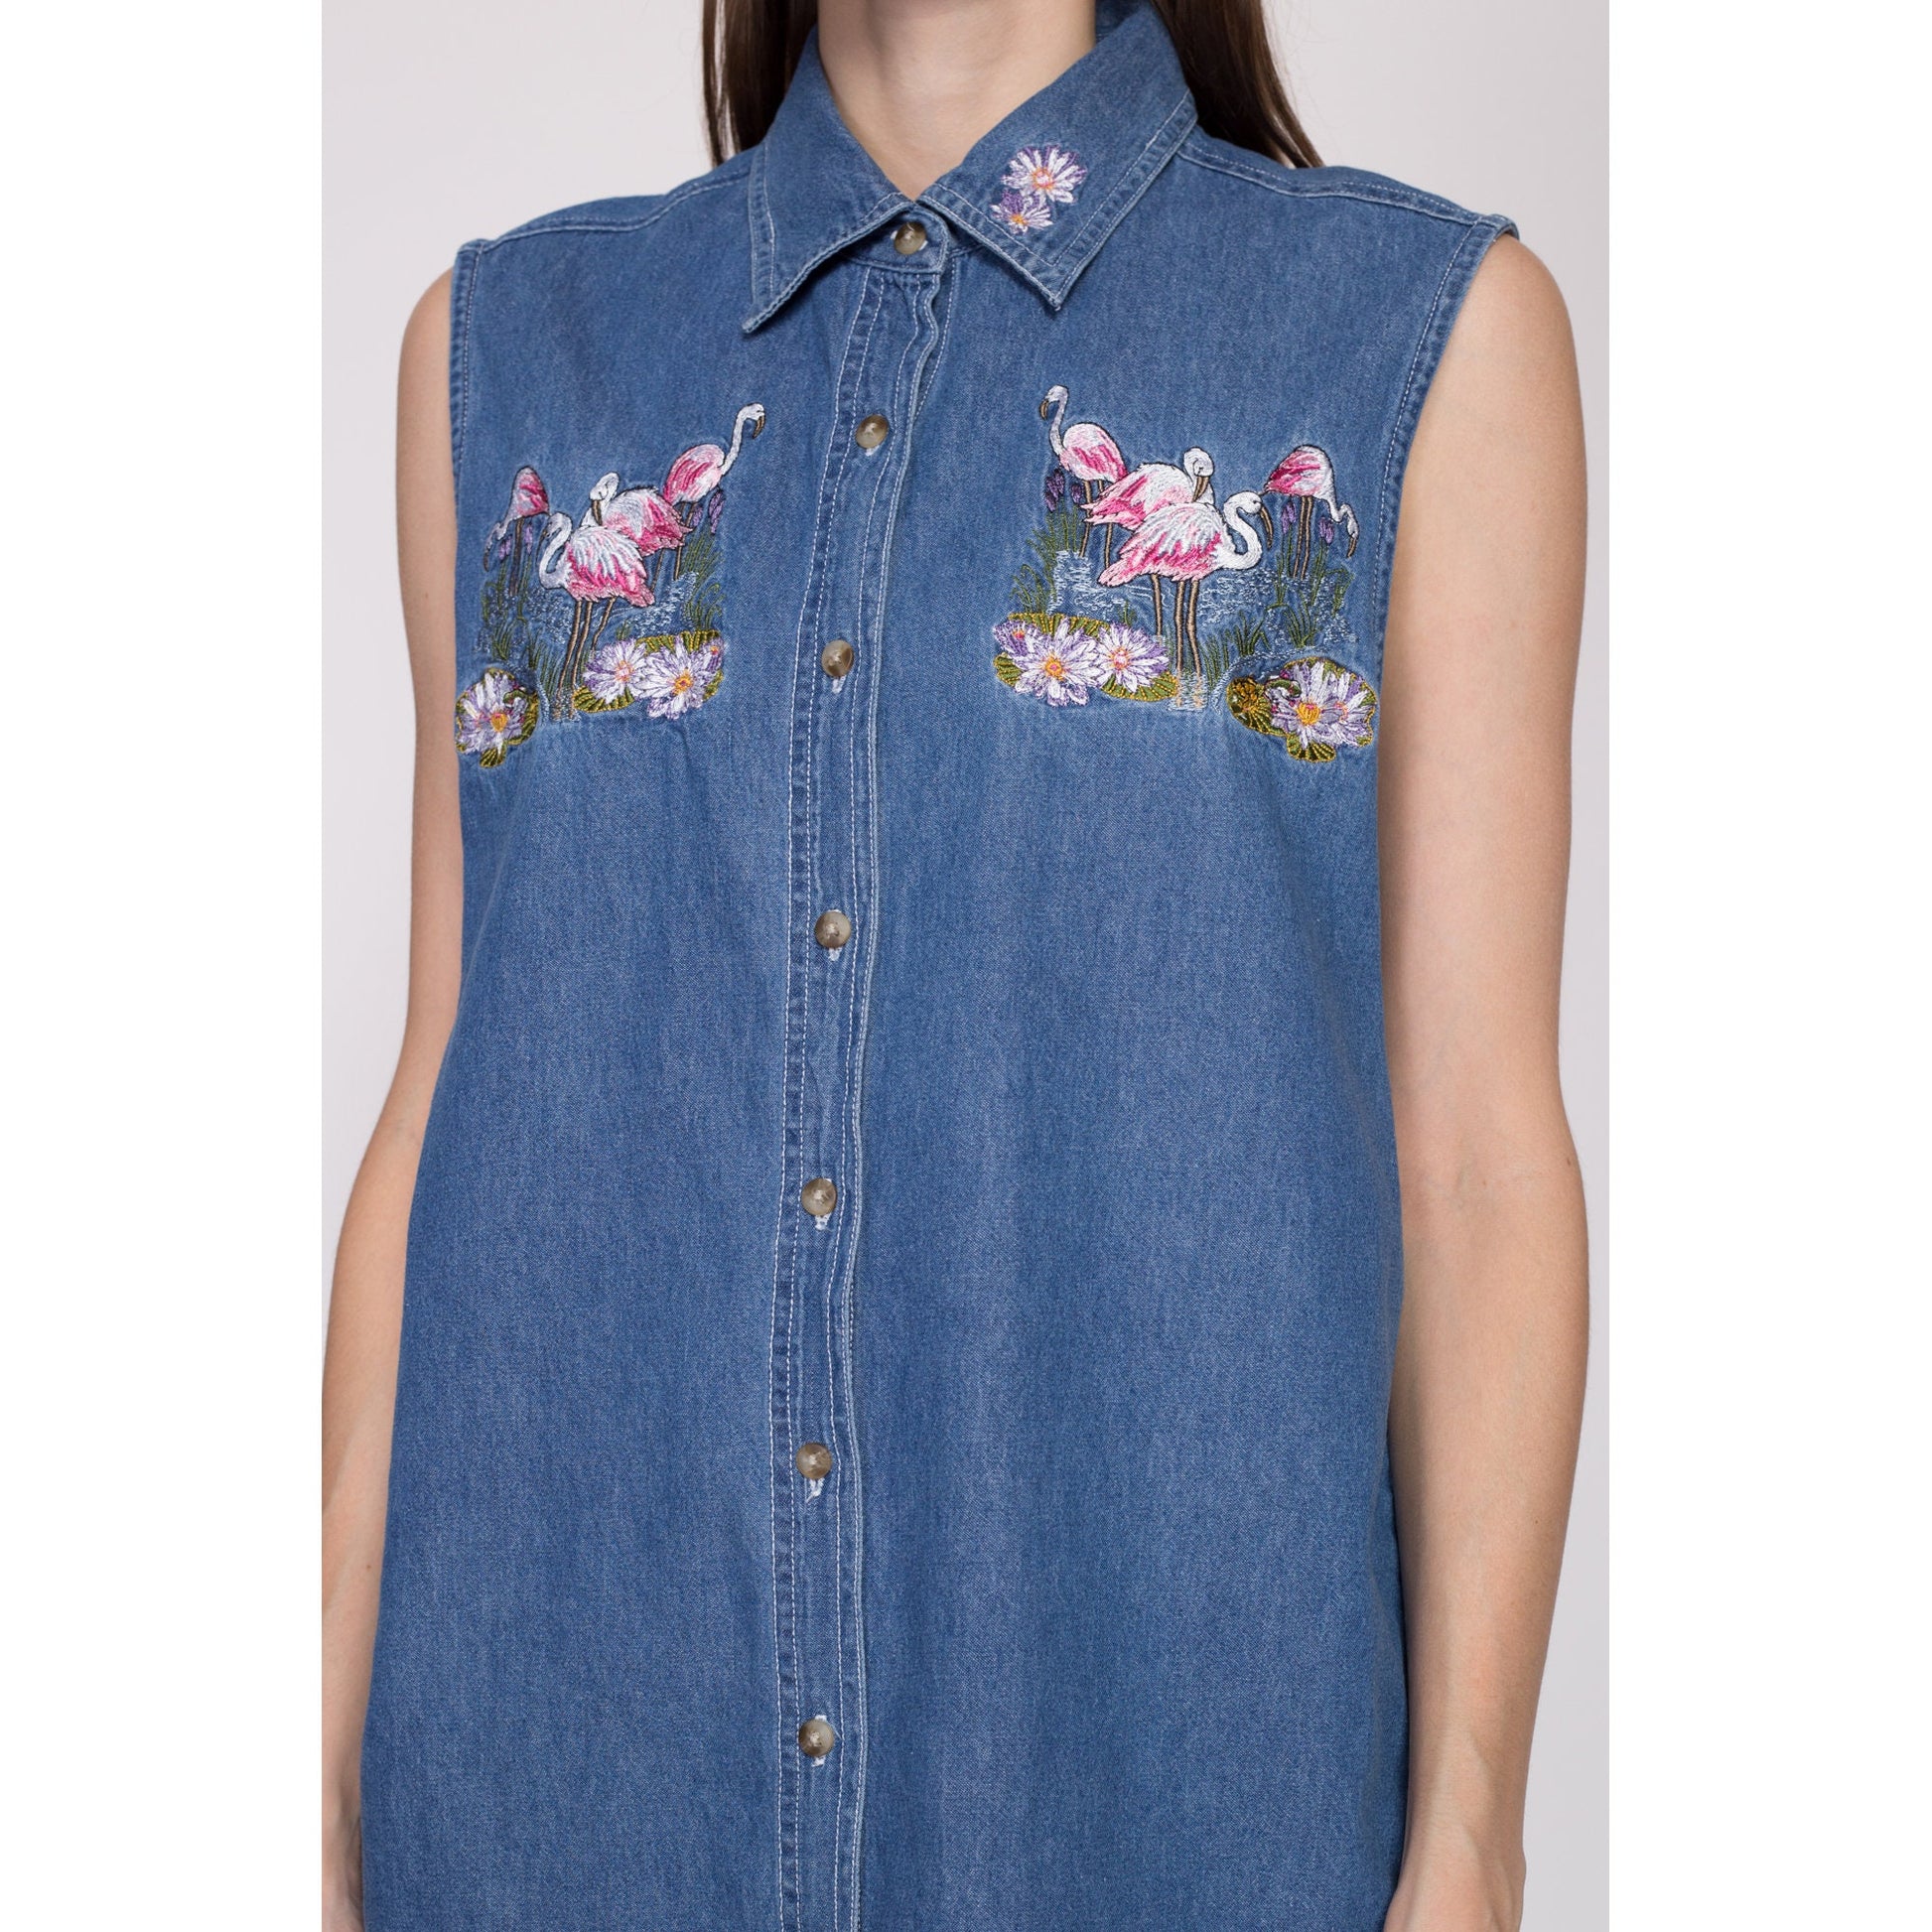 L| 90s Flamingo Chambray Sleeveless Shirt - Large | Vintage Embroidered Denim Vest